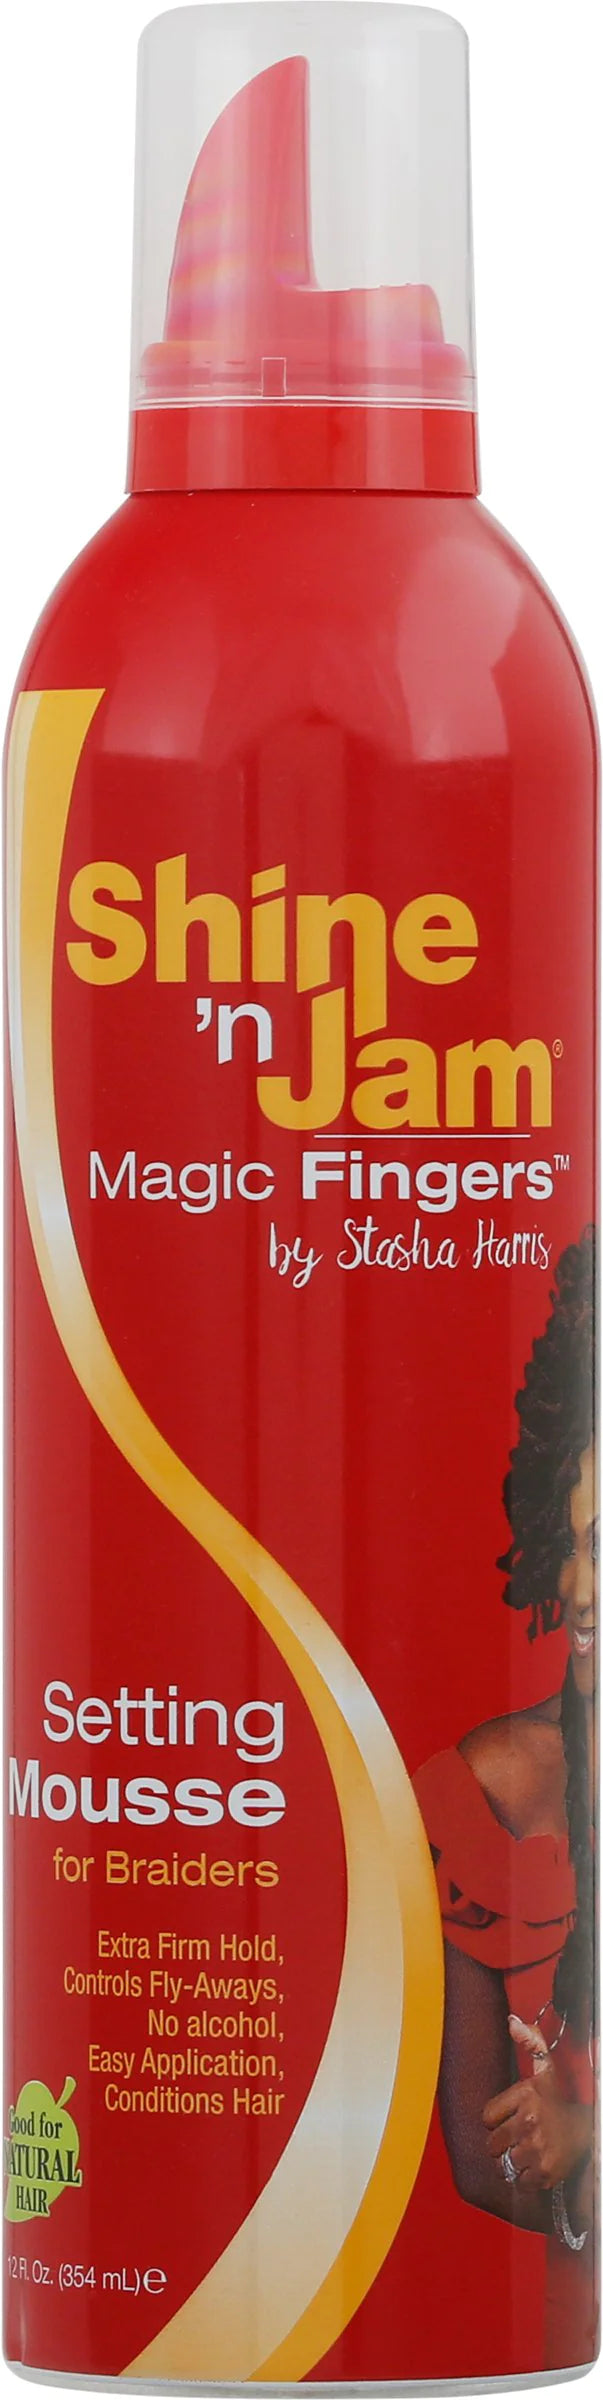 Ampro Shine N Jam Magic Fingers Setting Mousse for Braiders, 12oz.,